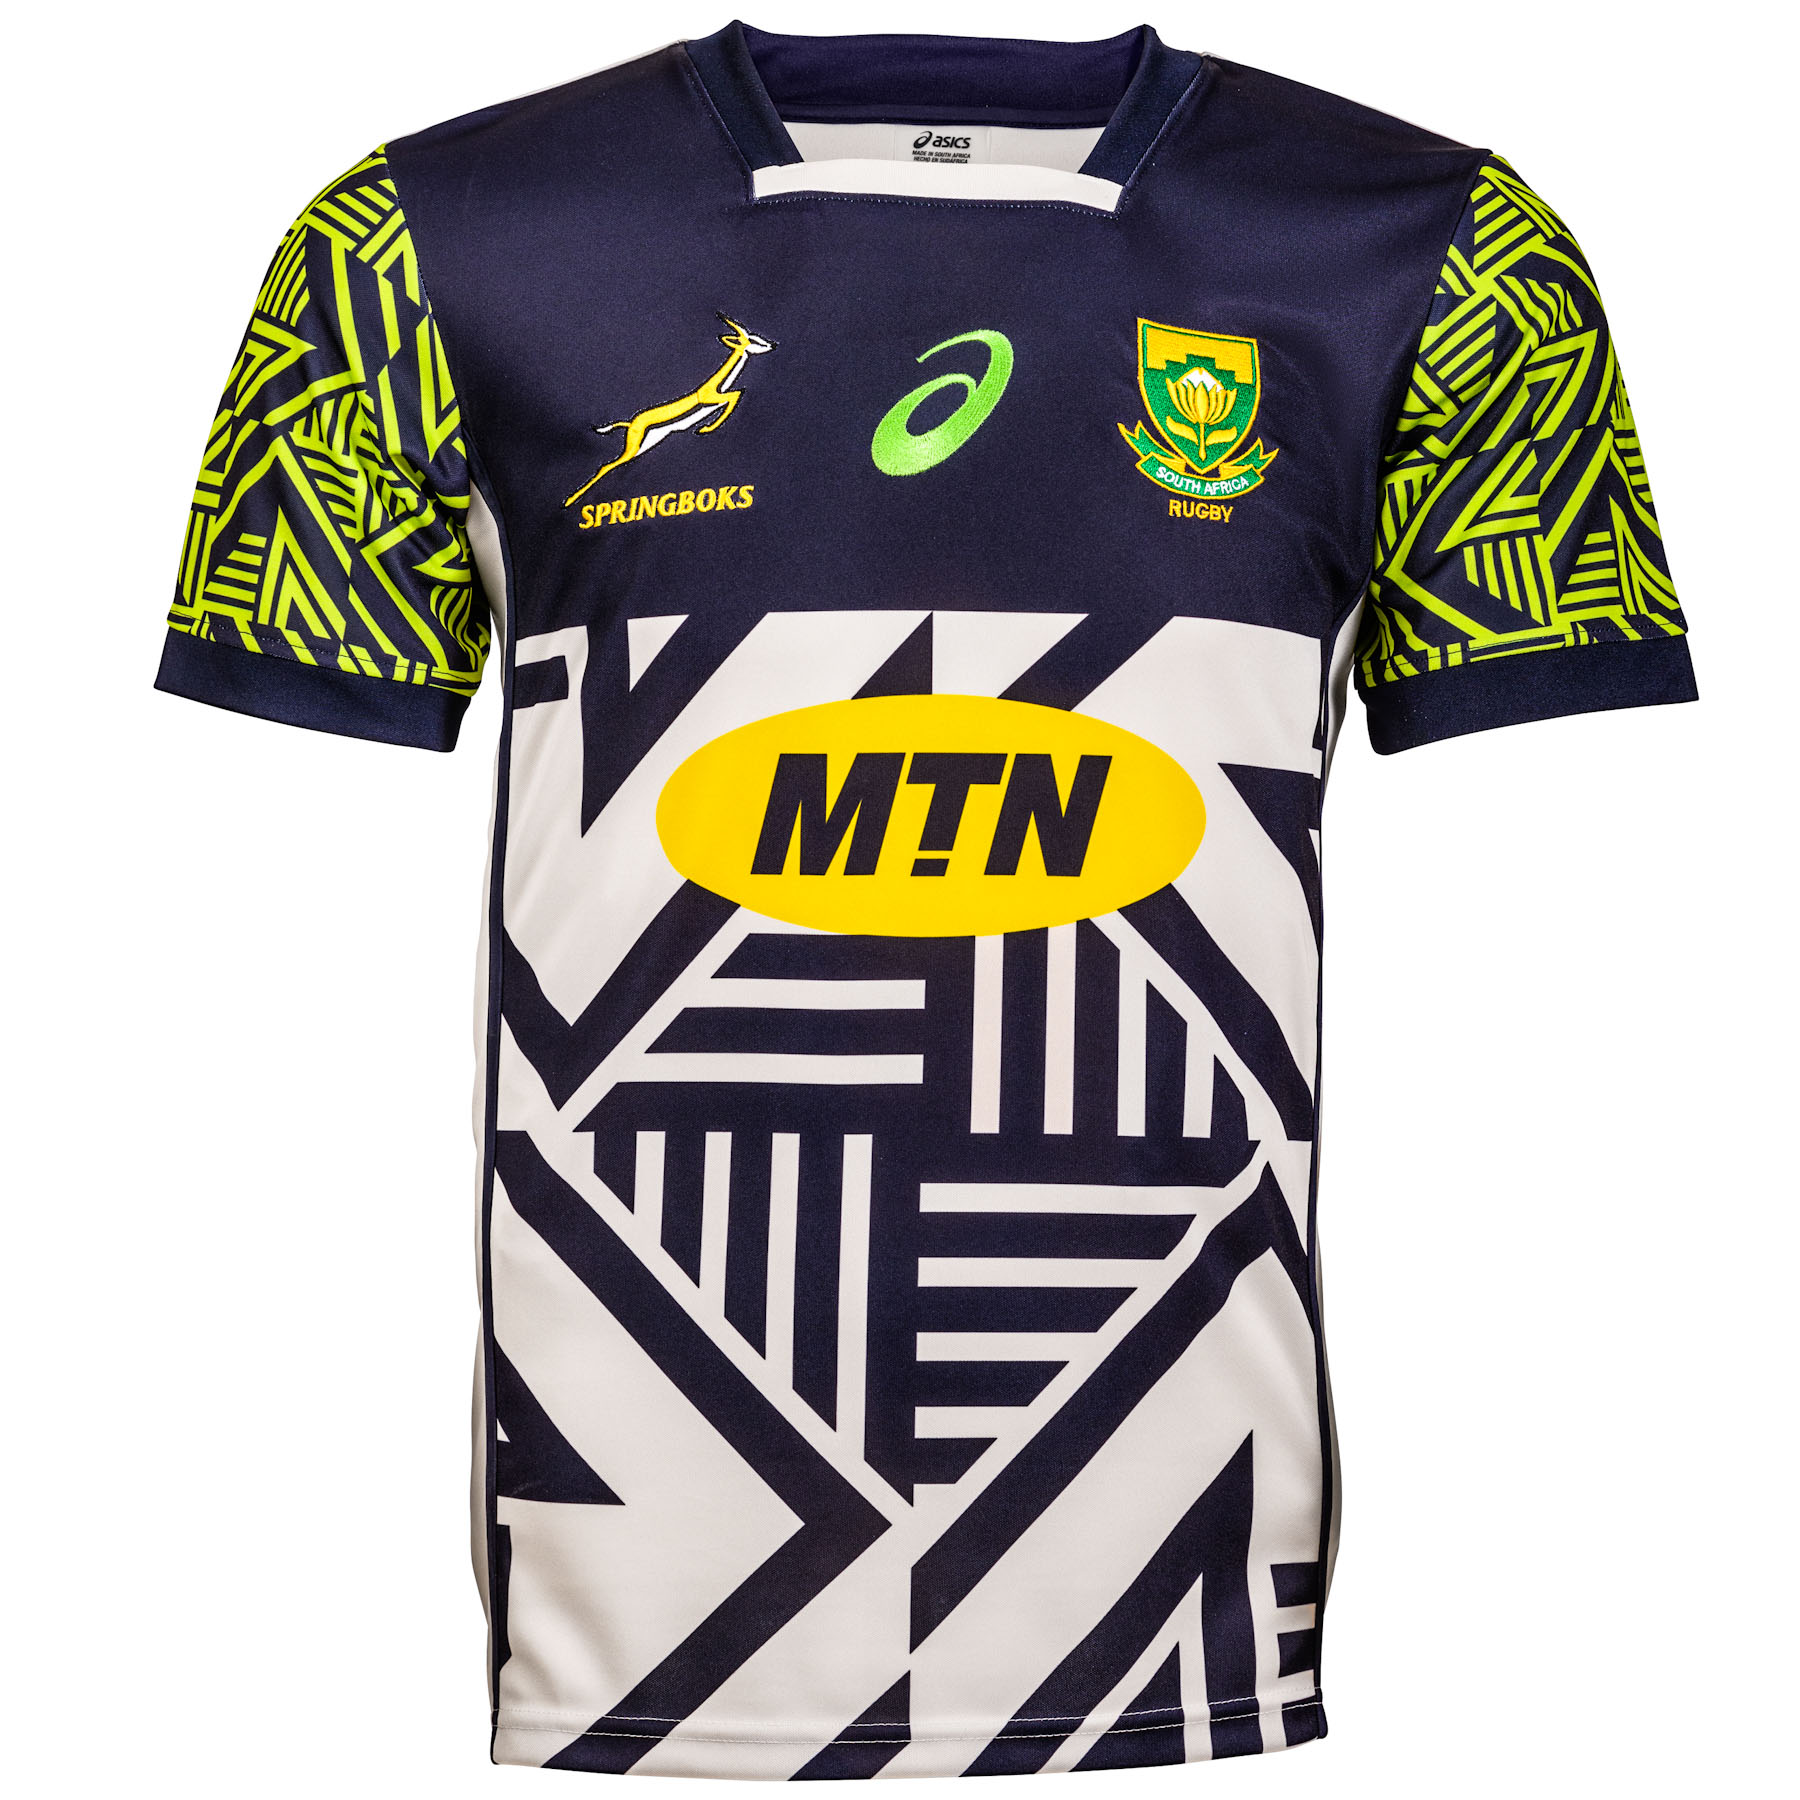 21st Century twist for “collab” Springbok jersey